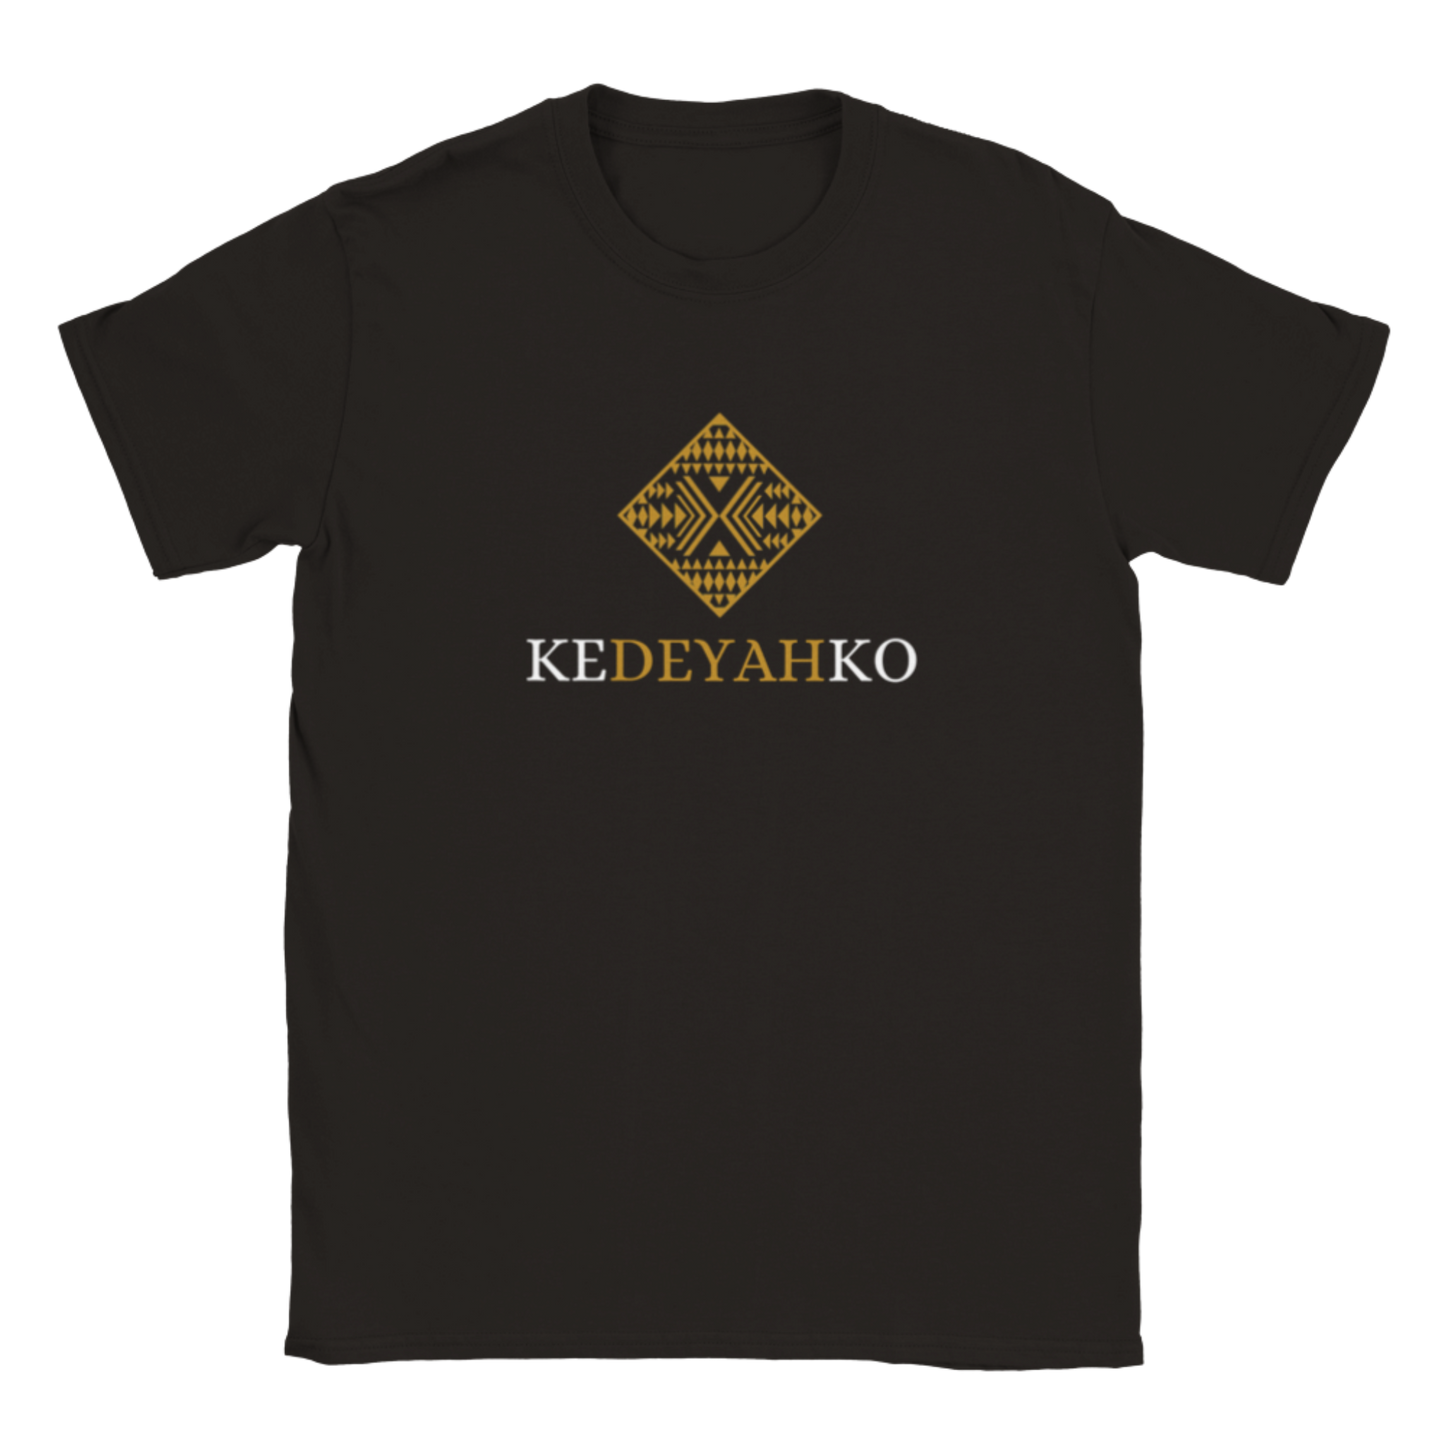 Kedeyahko Original T-shirt